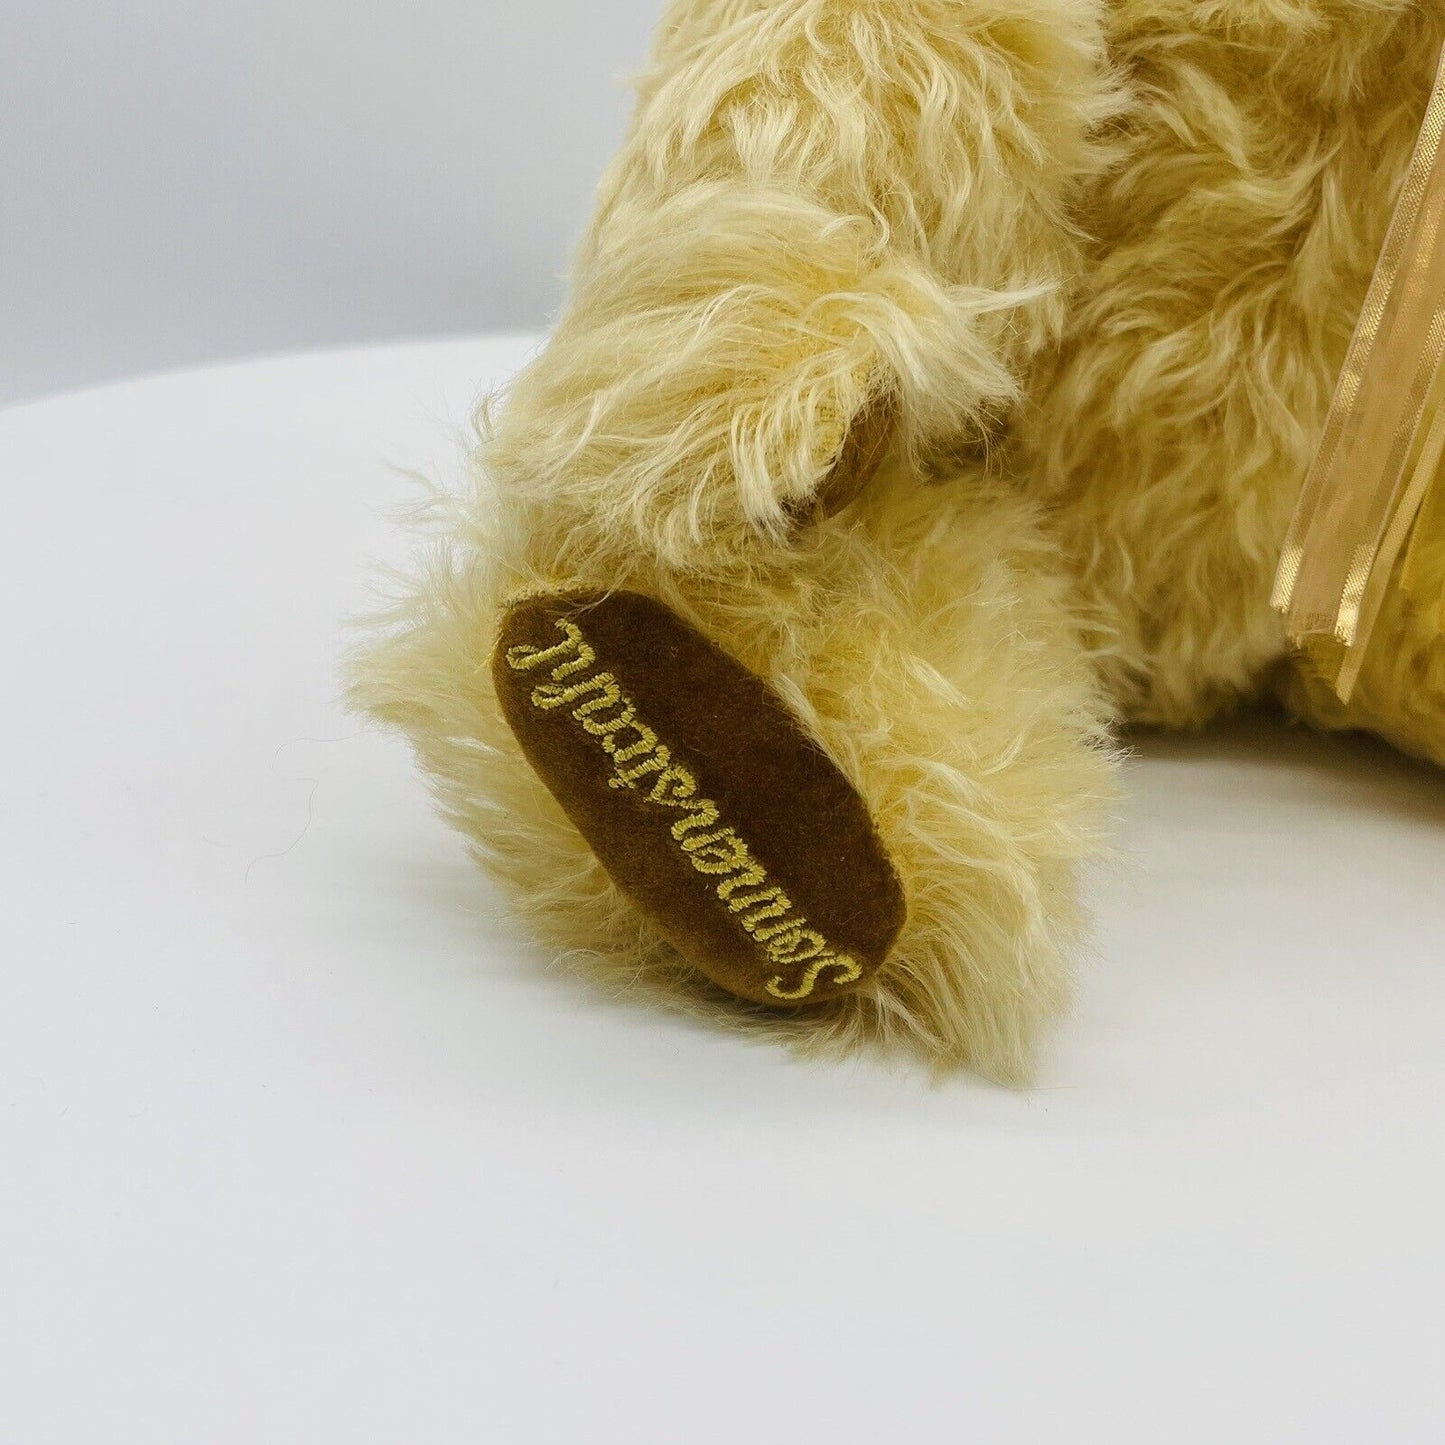 Hermann Teddy Original Teddybär Sonnenstrahl limitiert 1000 32cm Mohair